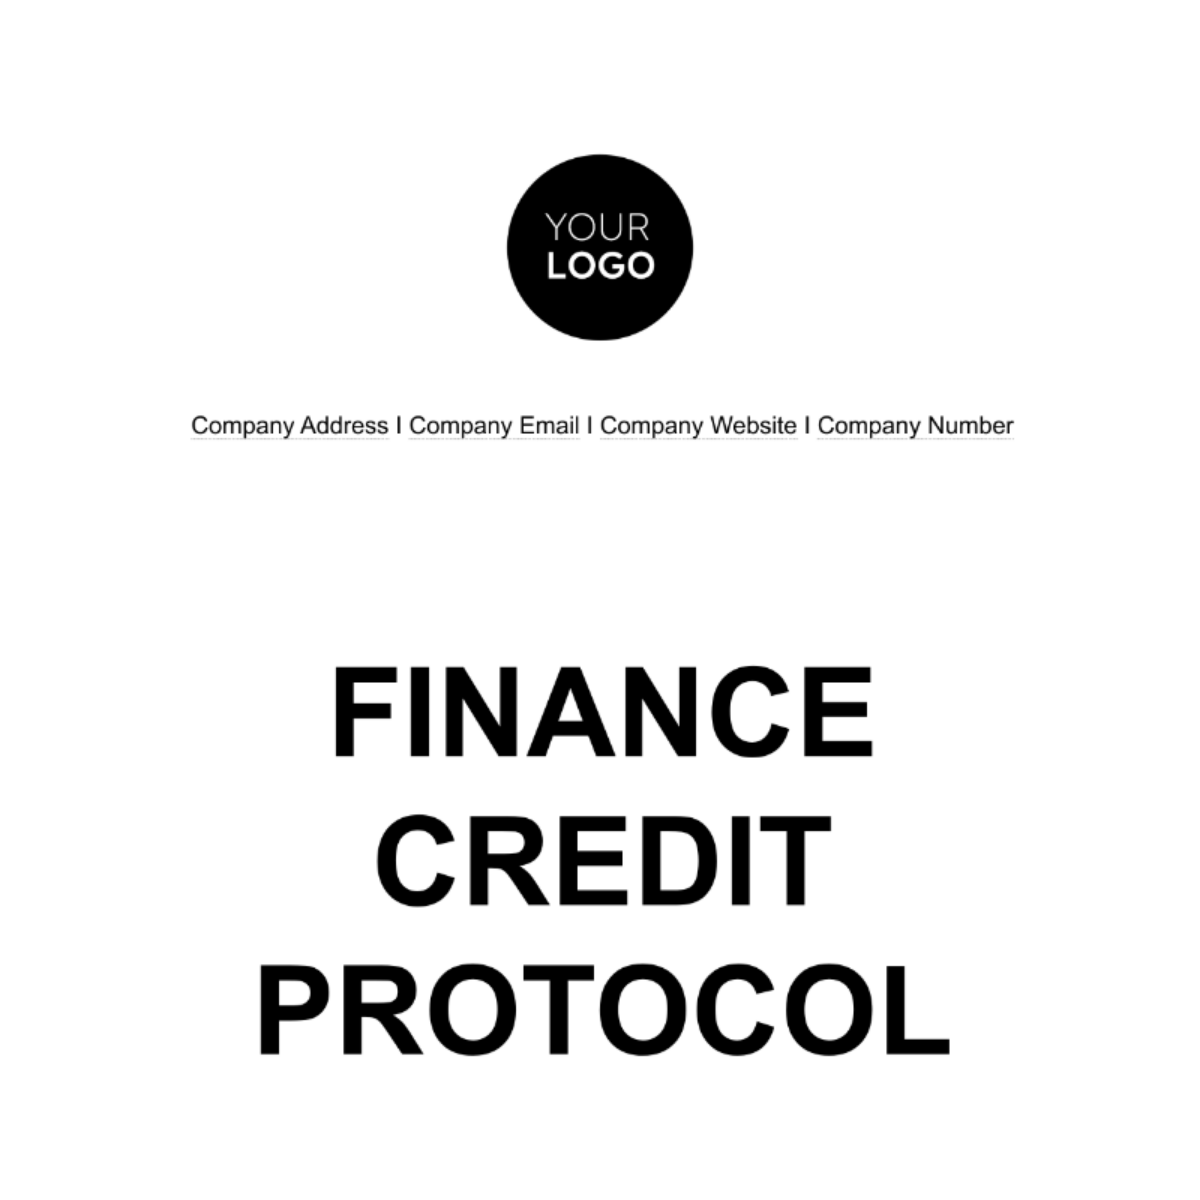 Free Finance Credit Protocol Template